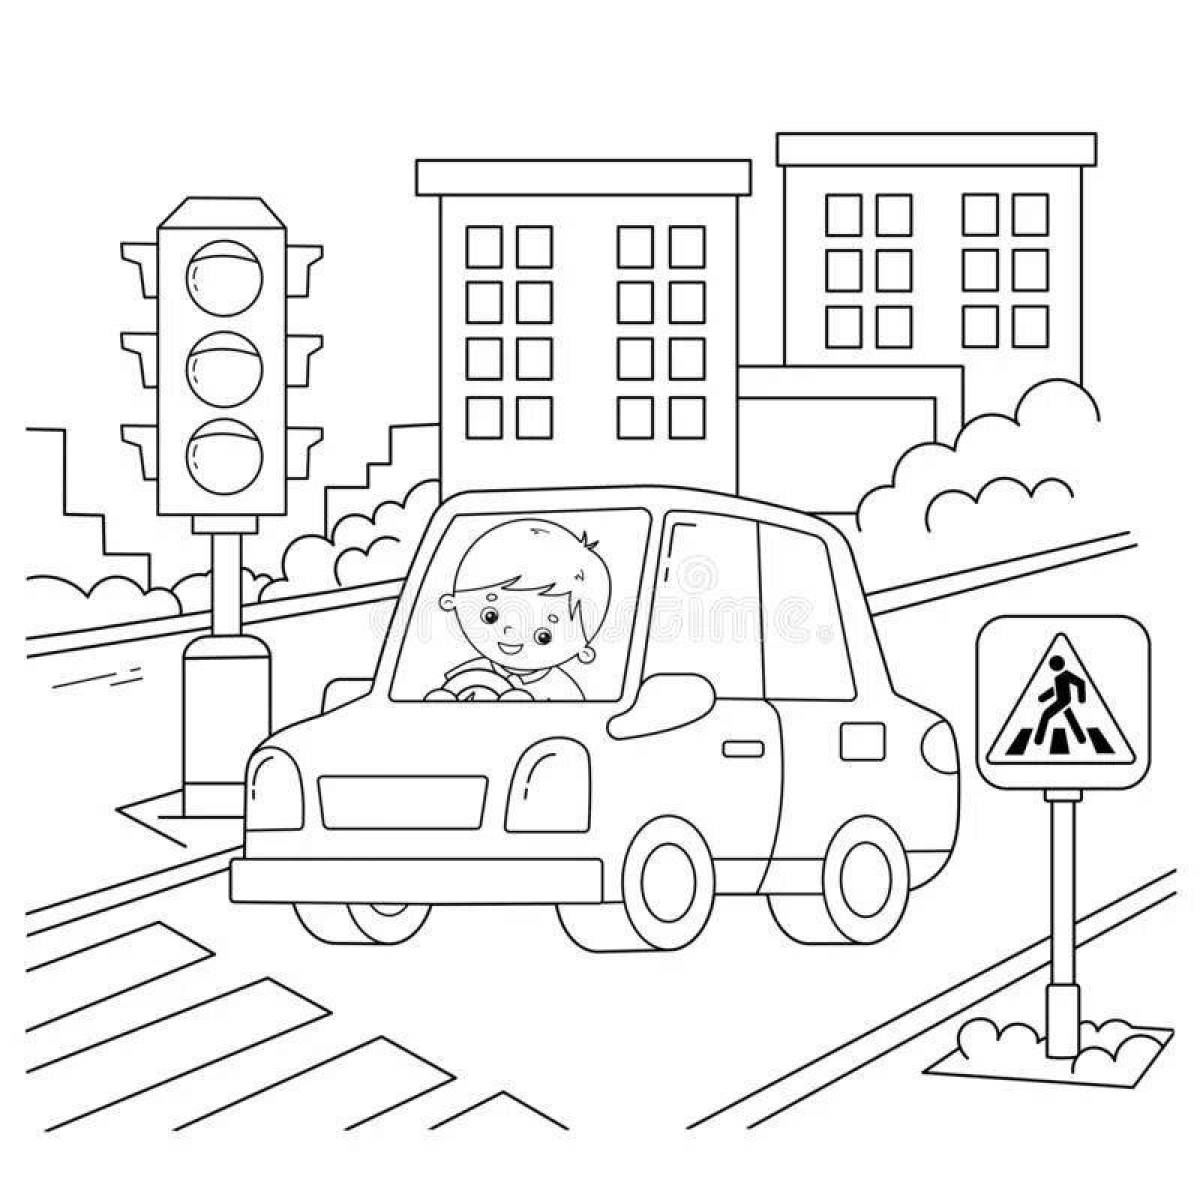 Dynamic pedestrian traffic light